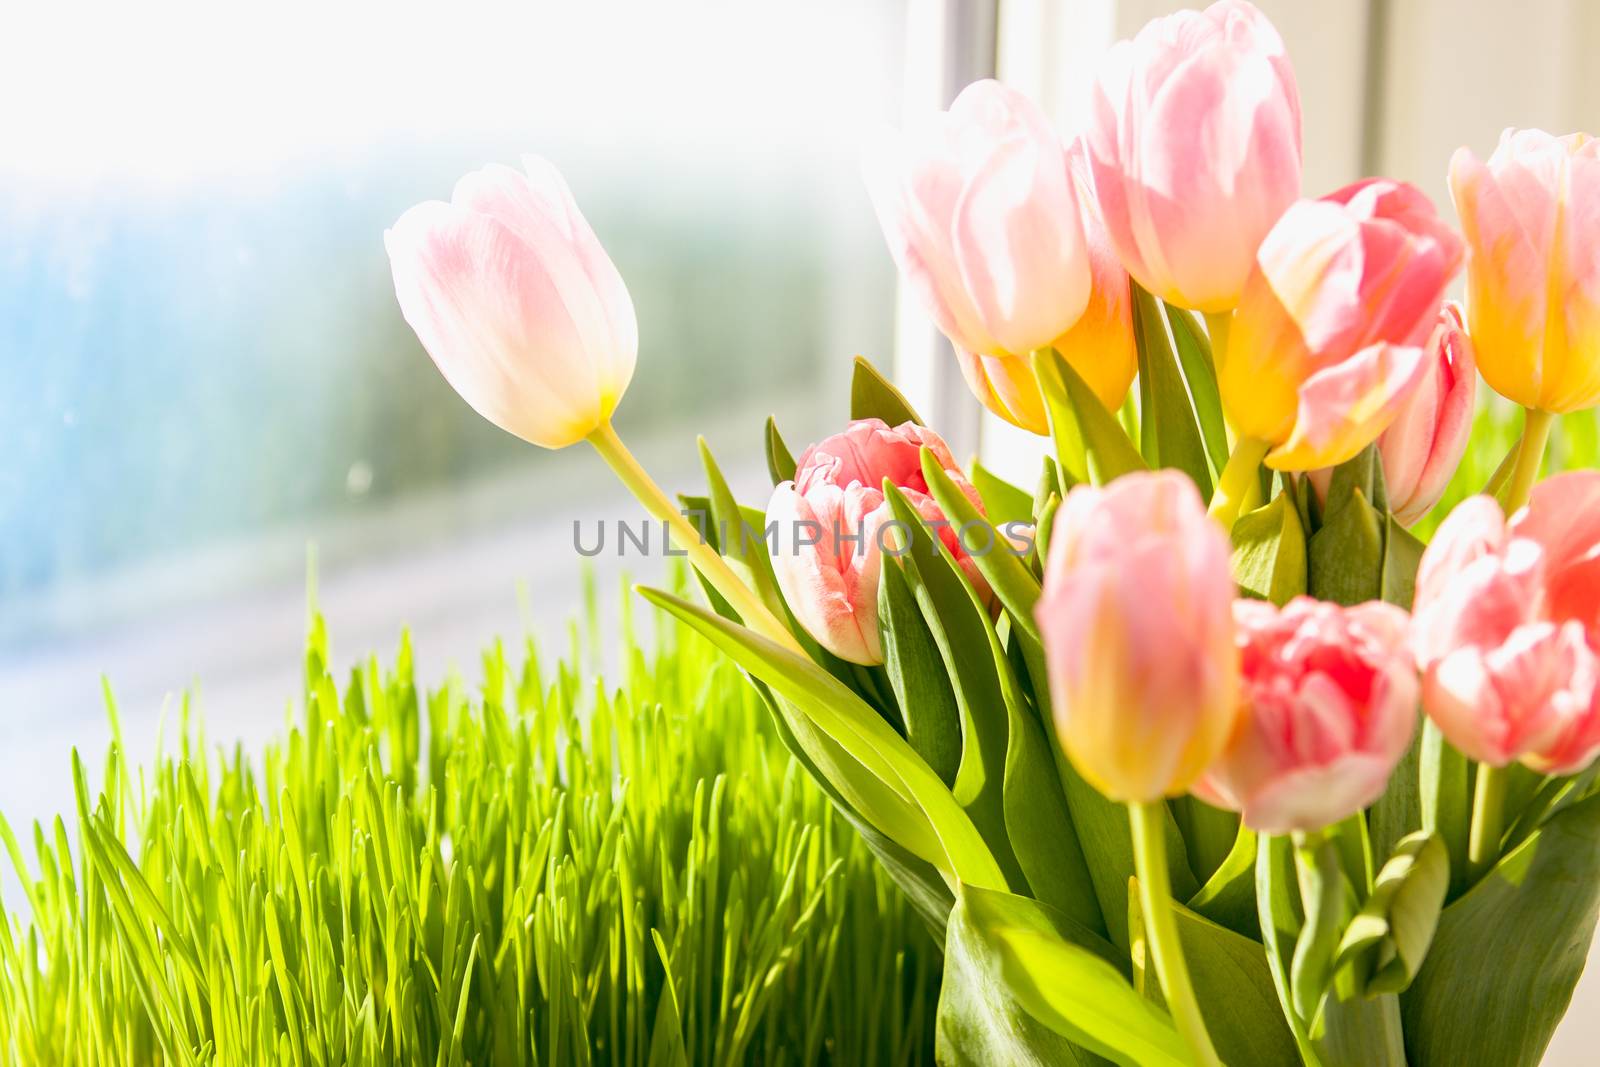 pink tulips against grass on windowsill by Kryzhov